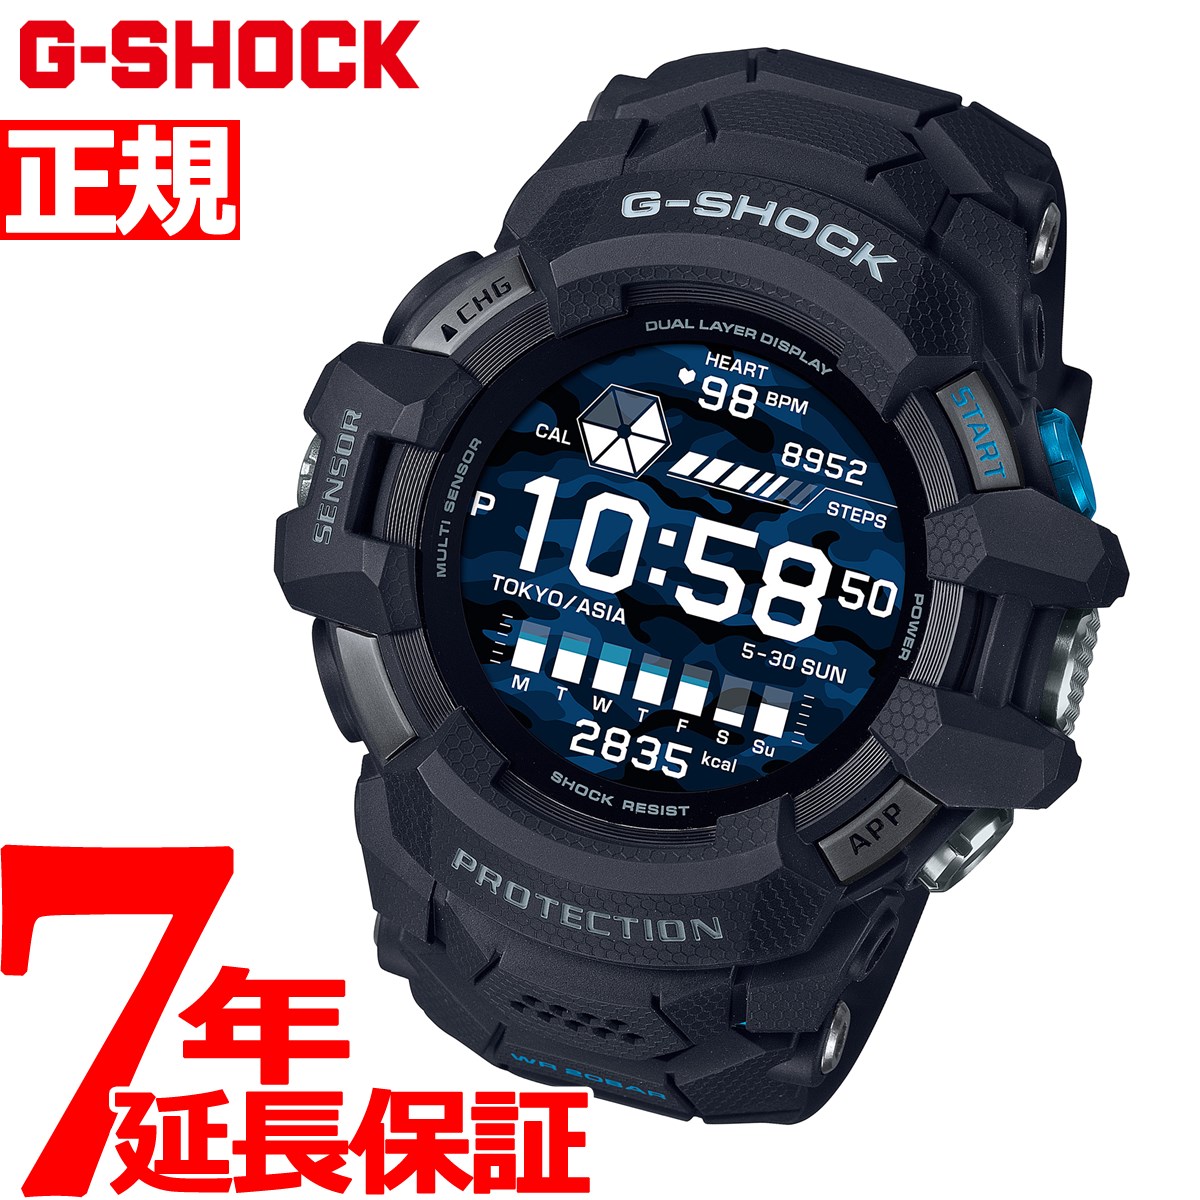 G-SHOCK G-SQUAD PRO カシオ Gショック Wear OS by Google 搭載 GPS スマートウォッチ CASIO 腕時計 メンズ ジースクワッド プロ GSW-H1000-1JR